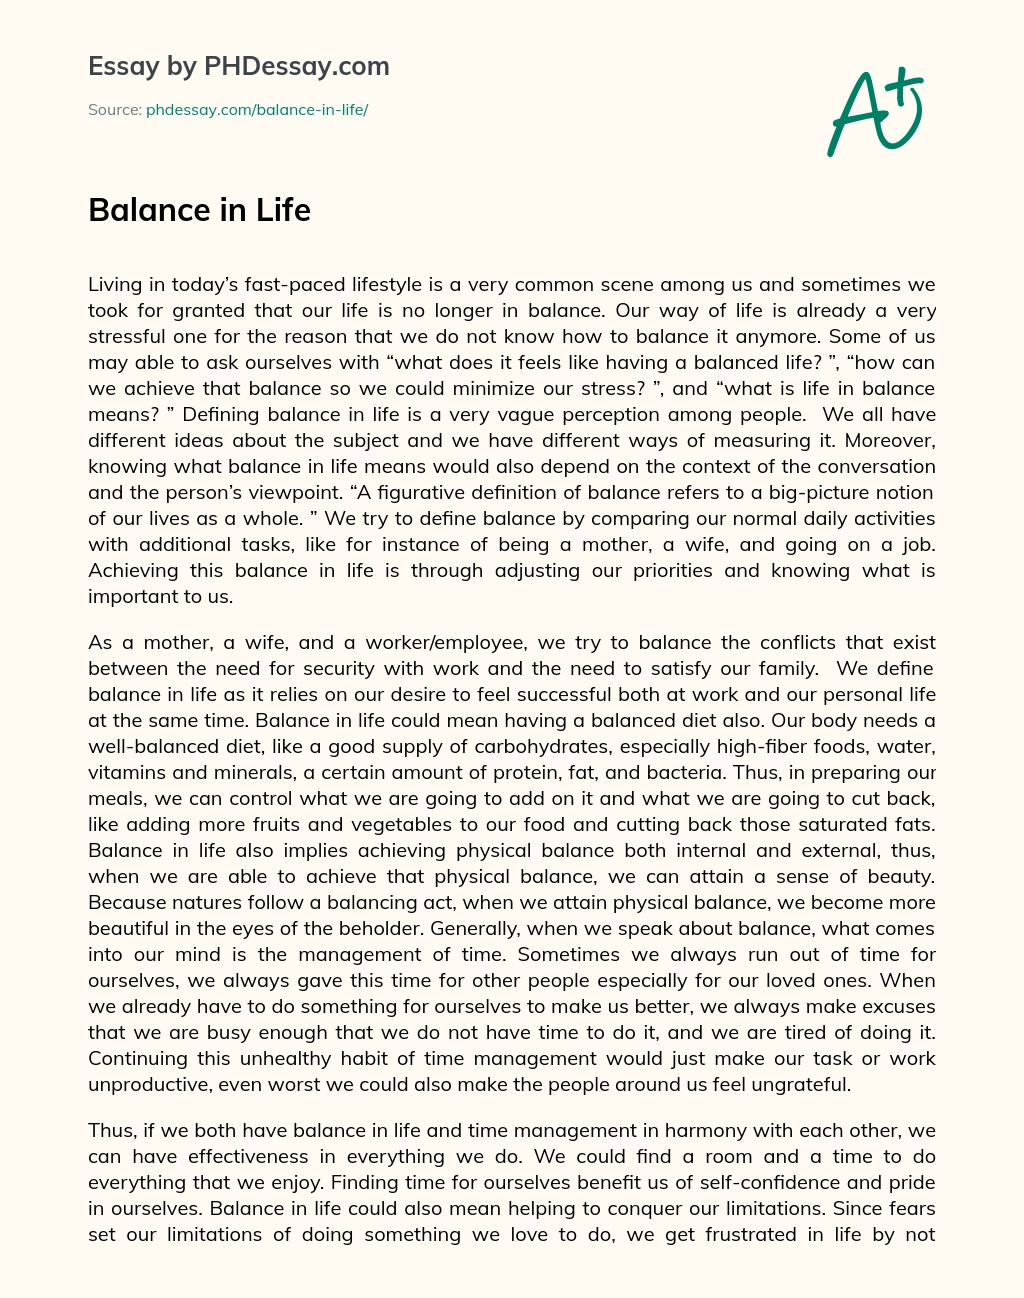 Balance in Life essay